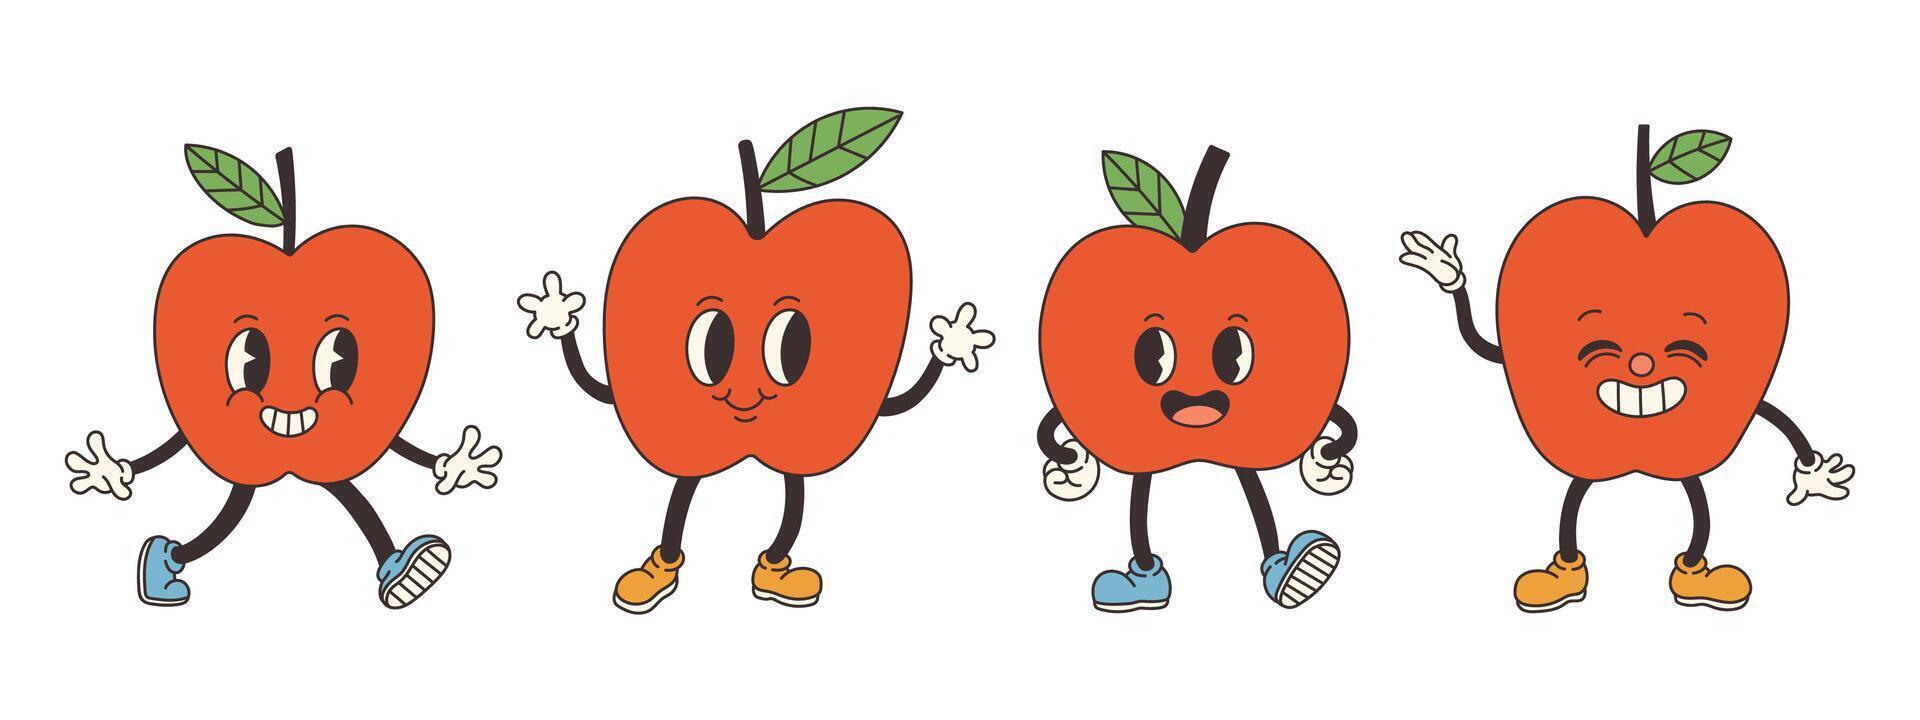 groovig Apfel Satz. Hand zeichnen komisch retro Jahrgang modisch Stil Apfel Karikatur Charakter Illustration. Gekritzel Comic Sammlung. Vektor Illustration